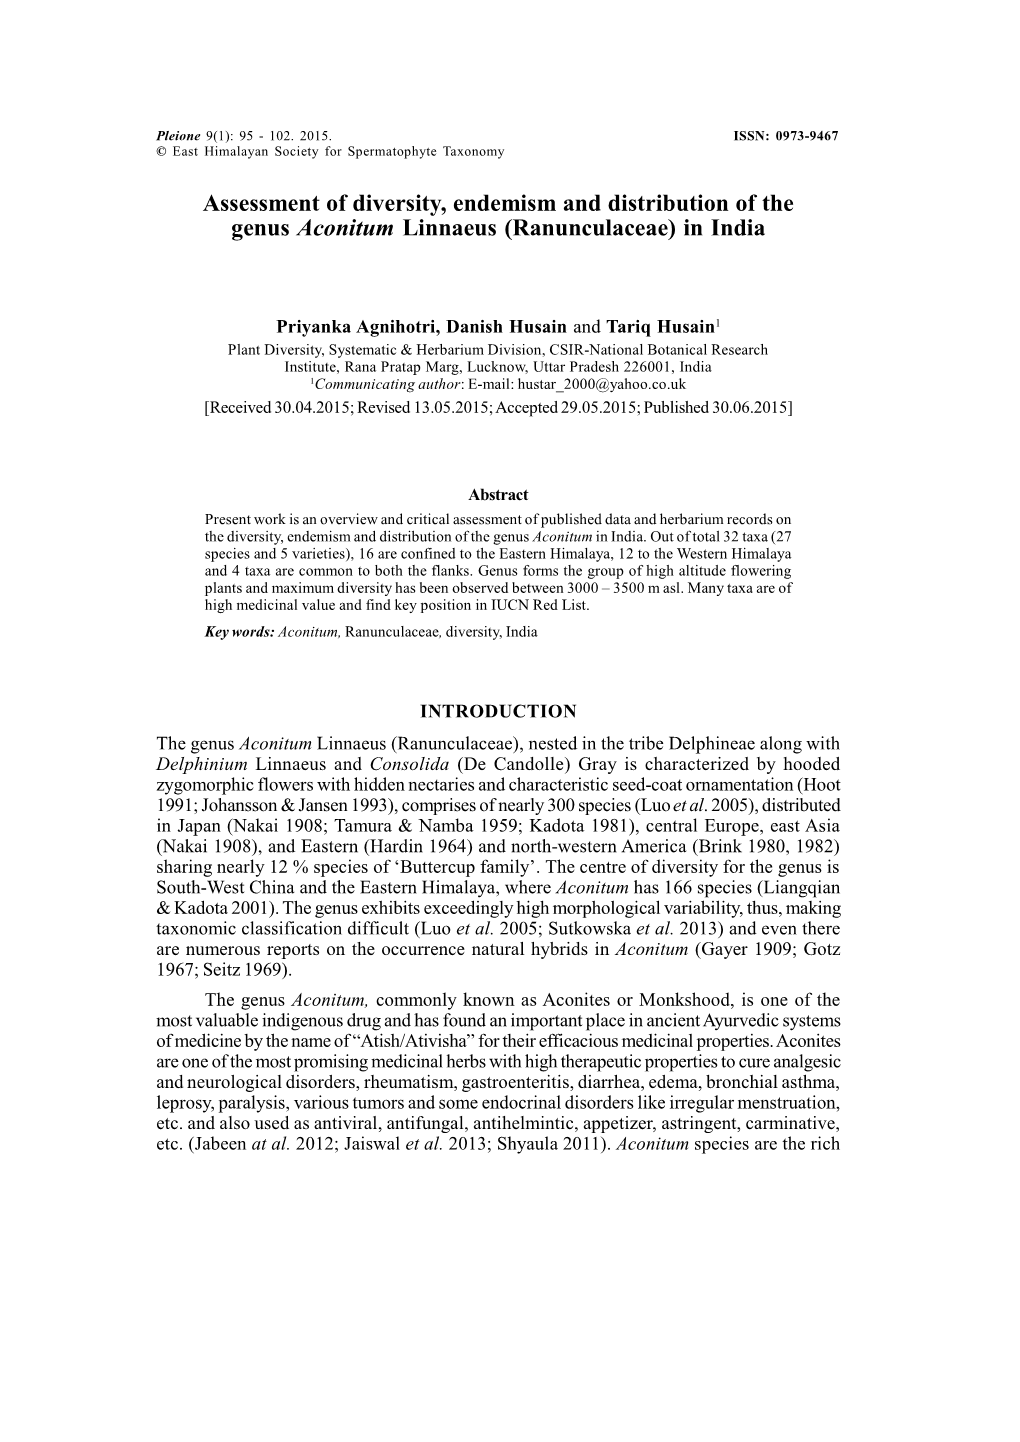 Assessment of Diversity, Endemism and Distribution of the Genus Aconitum Linnaeus (Ranunculaceae) in India